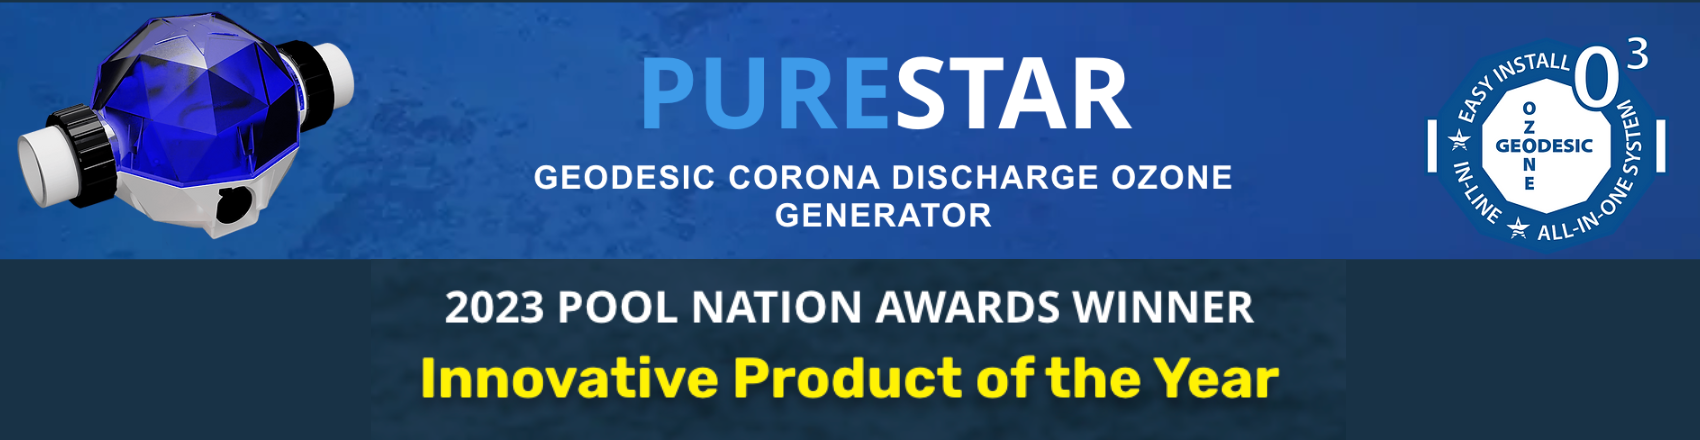 AquaStar PURESTAR™ Ozone Generator Innovative Product of the Year 2023 - Vita Filters